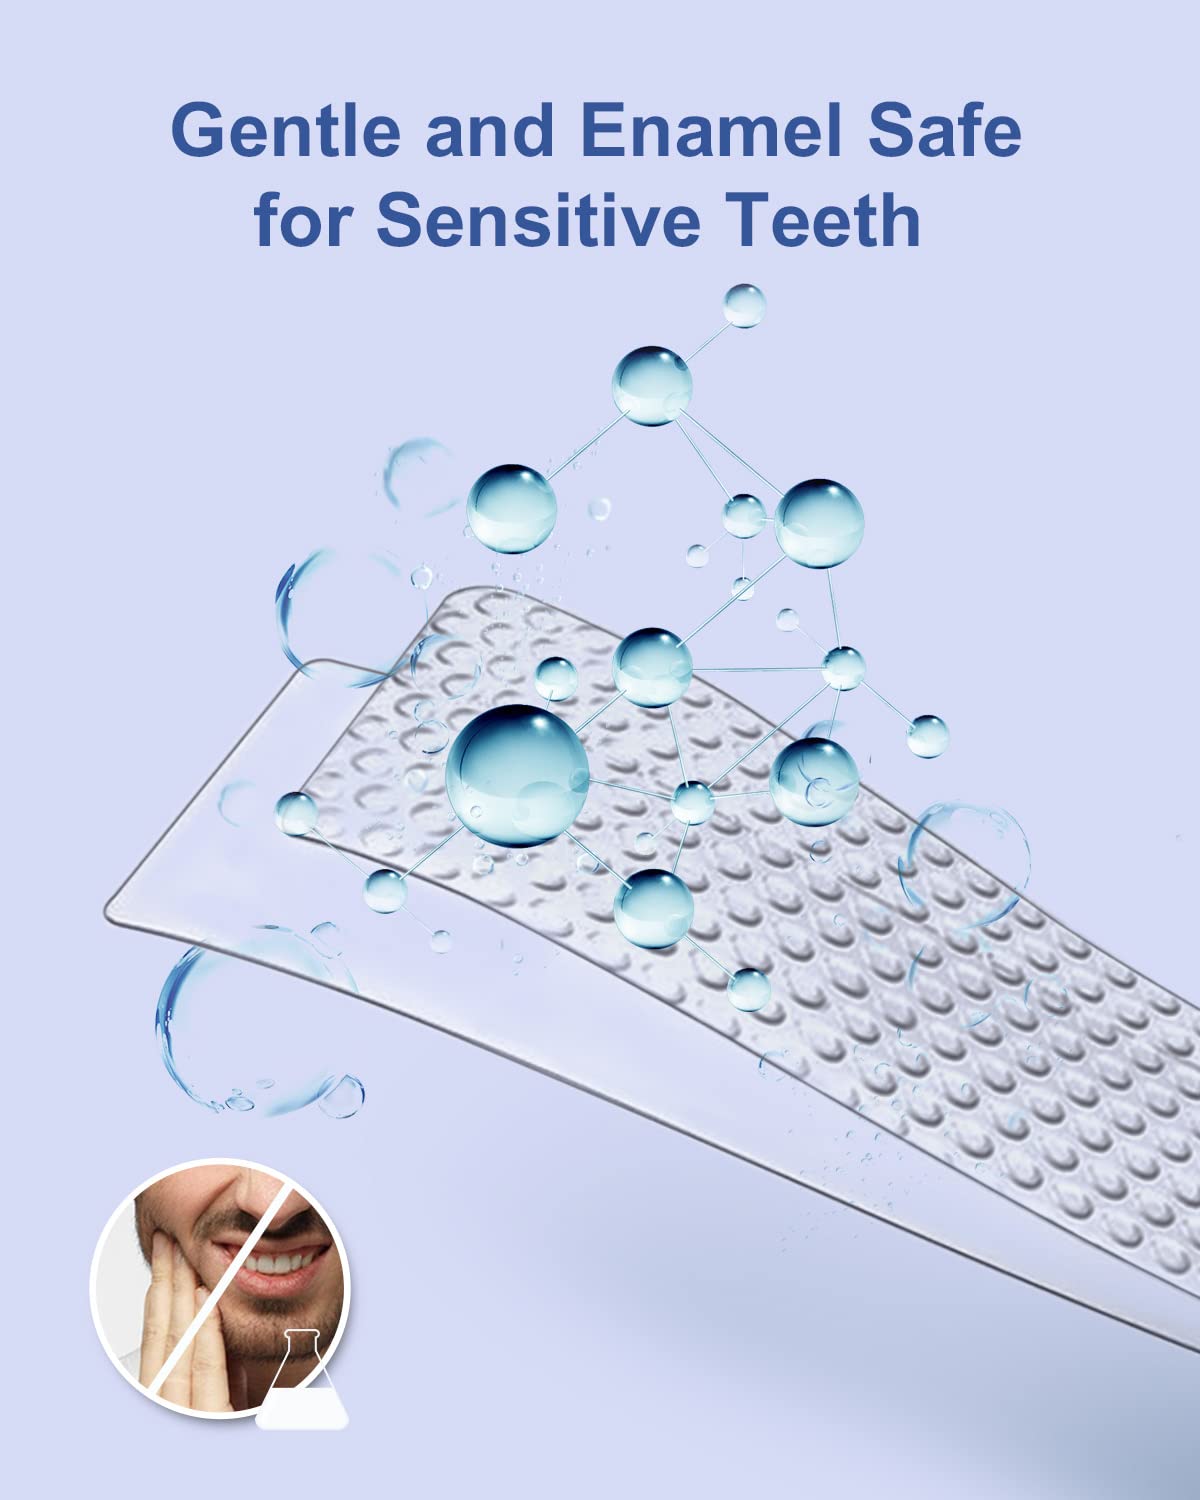 2 x Teeth Whitening Strips w/ 28x LED Light Kit Bundle - MySmile